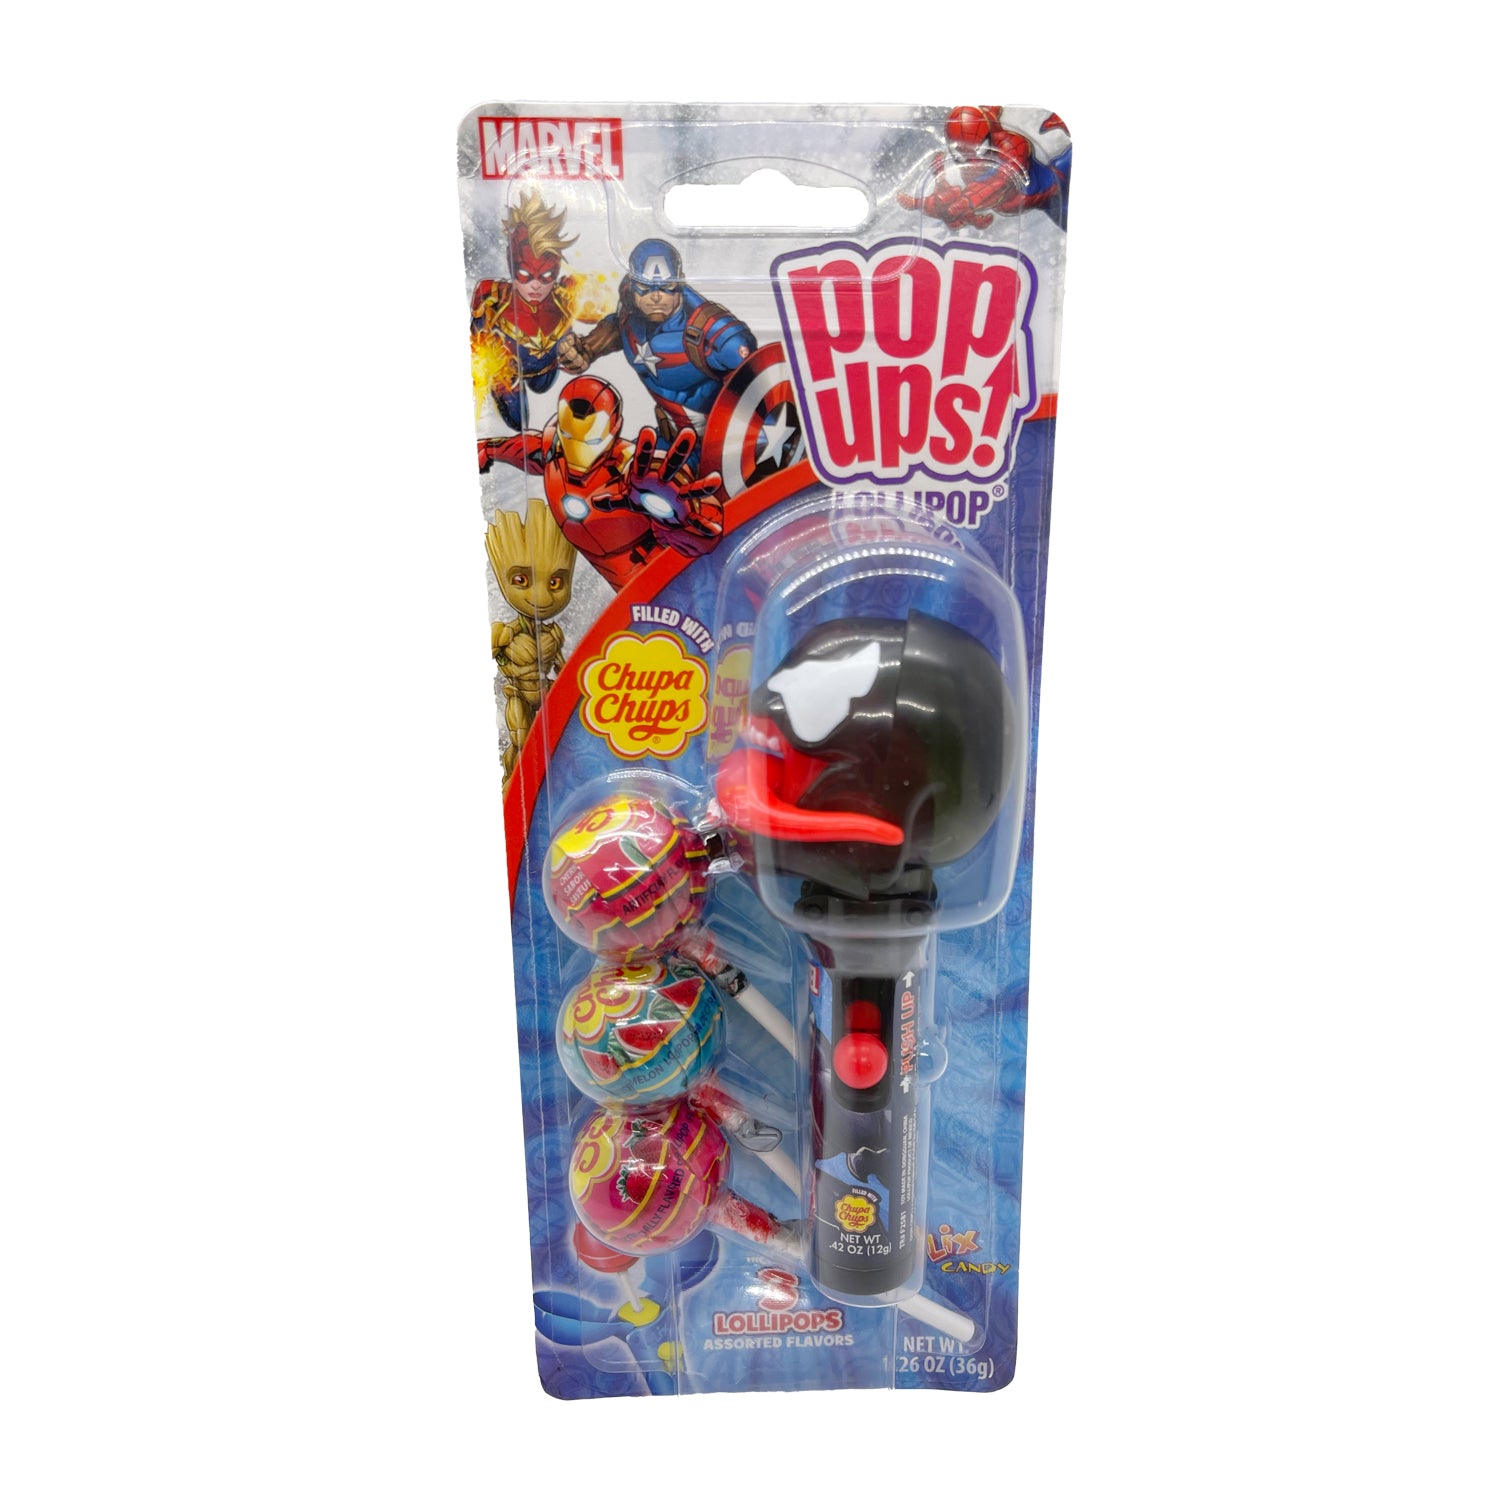 Chupa Chups Lollipop 12g - Assorted*